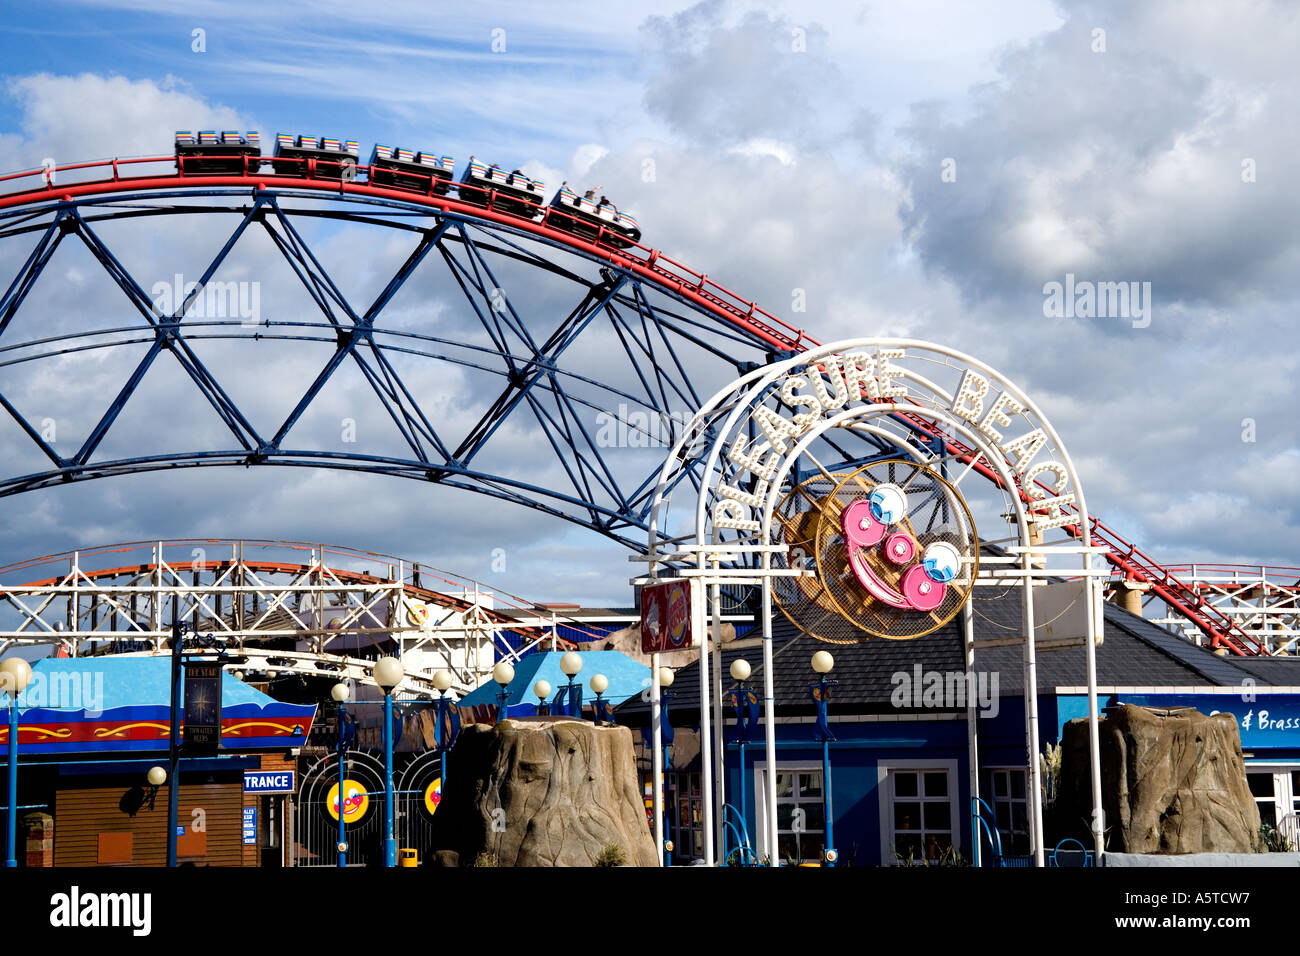 The big Dipper ride at the Pleasure beach amusement park,Blackpool ...